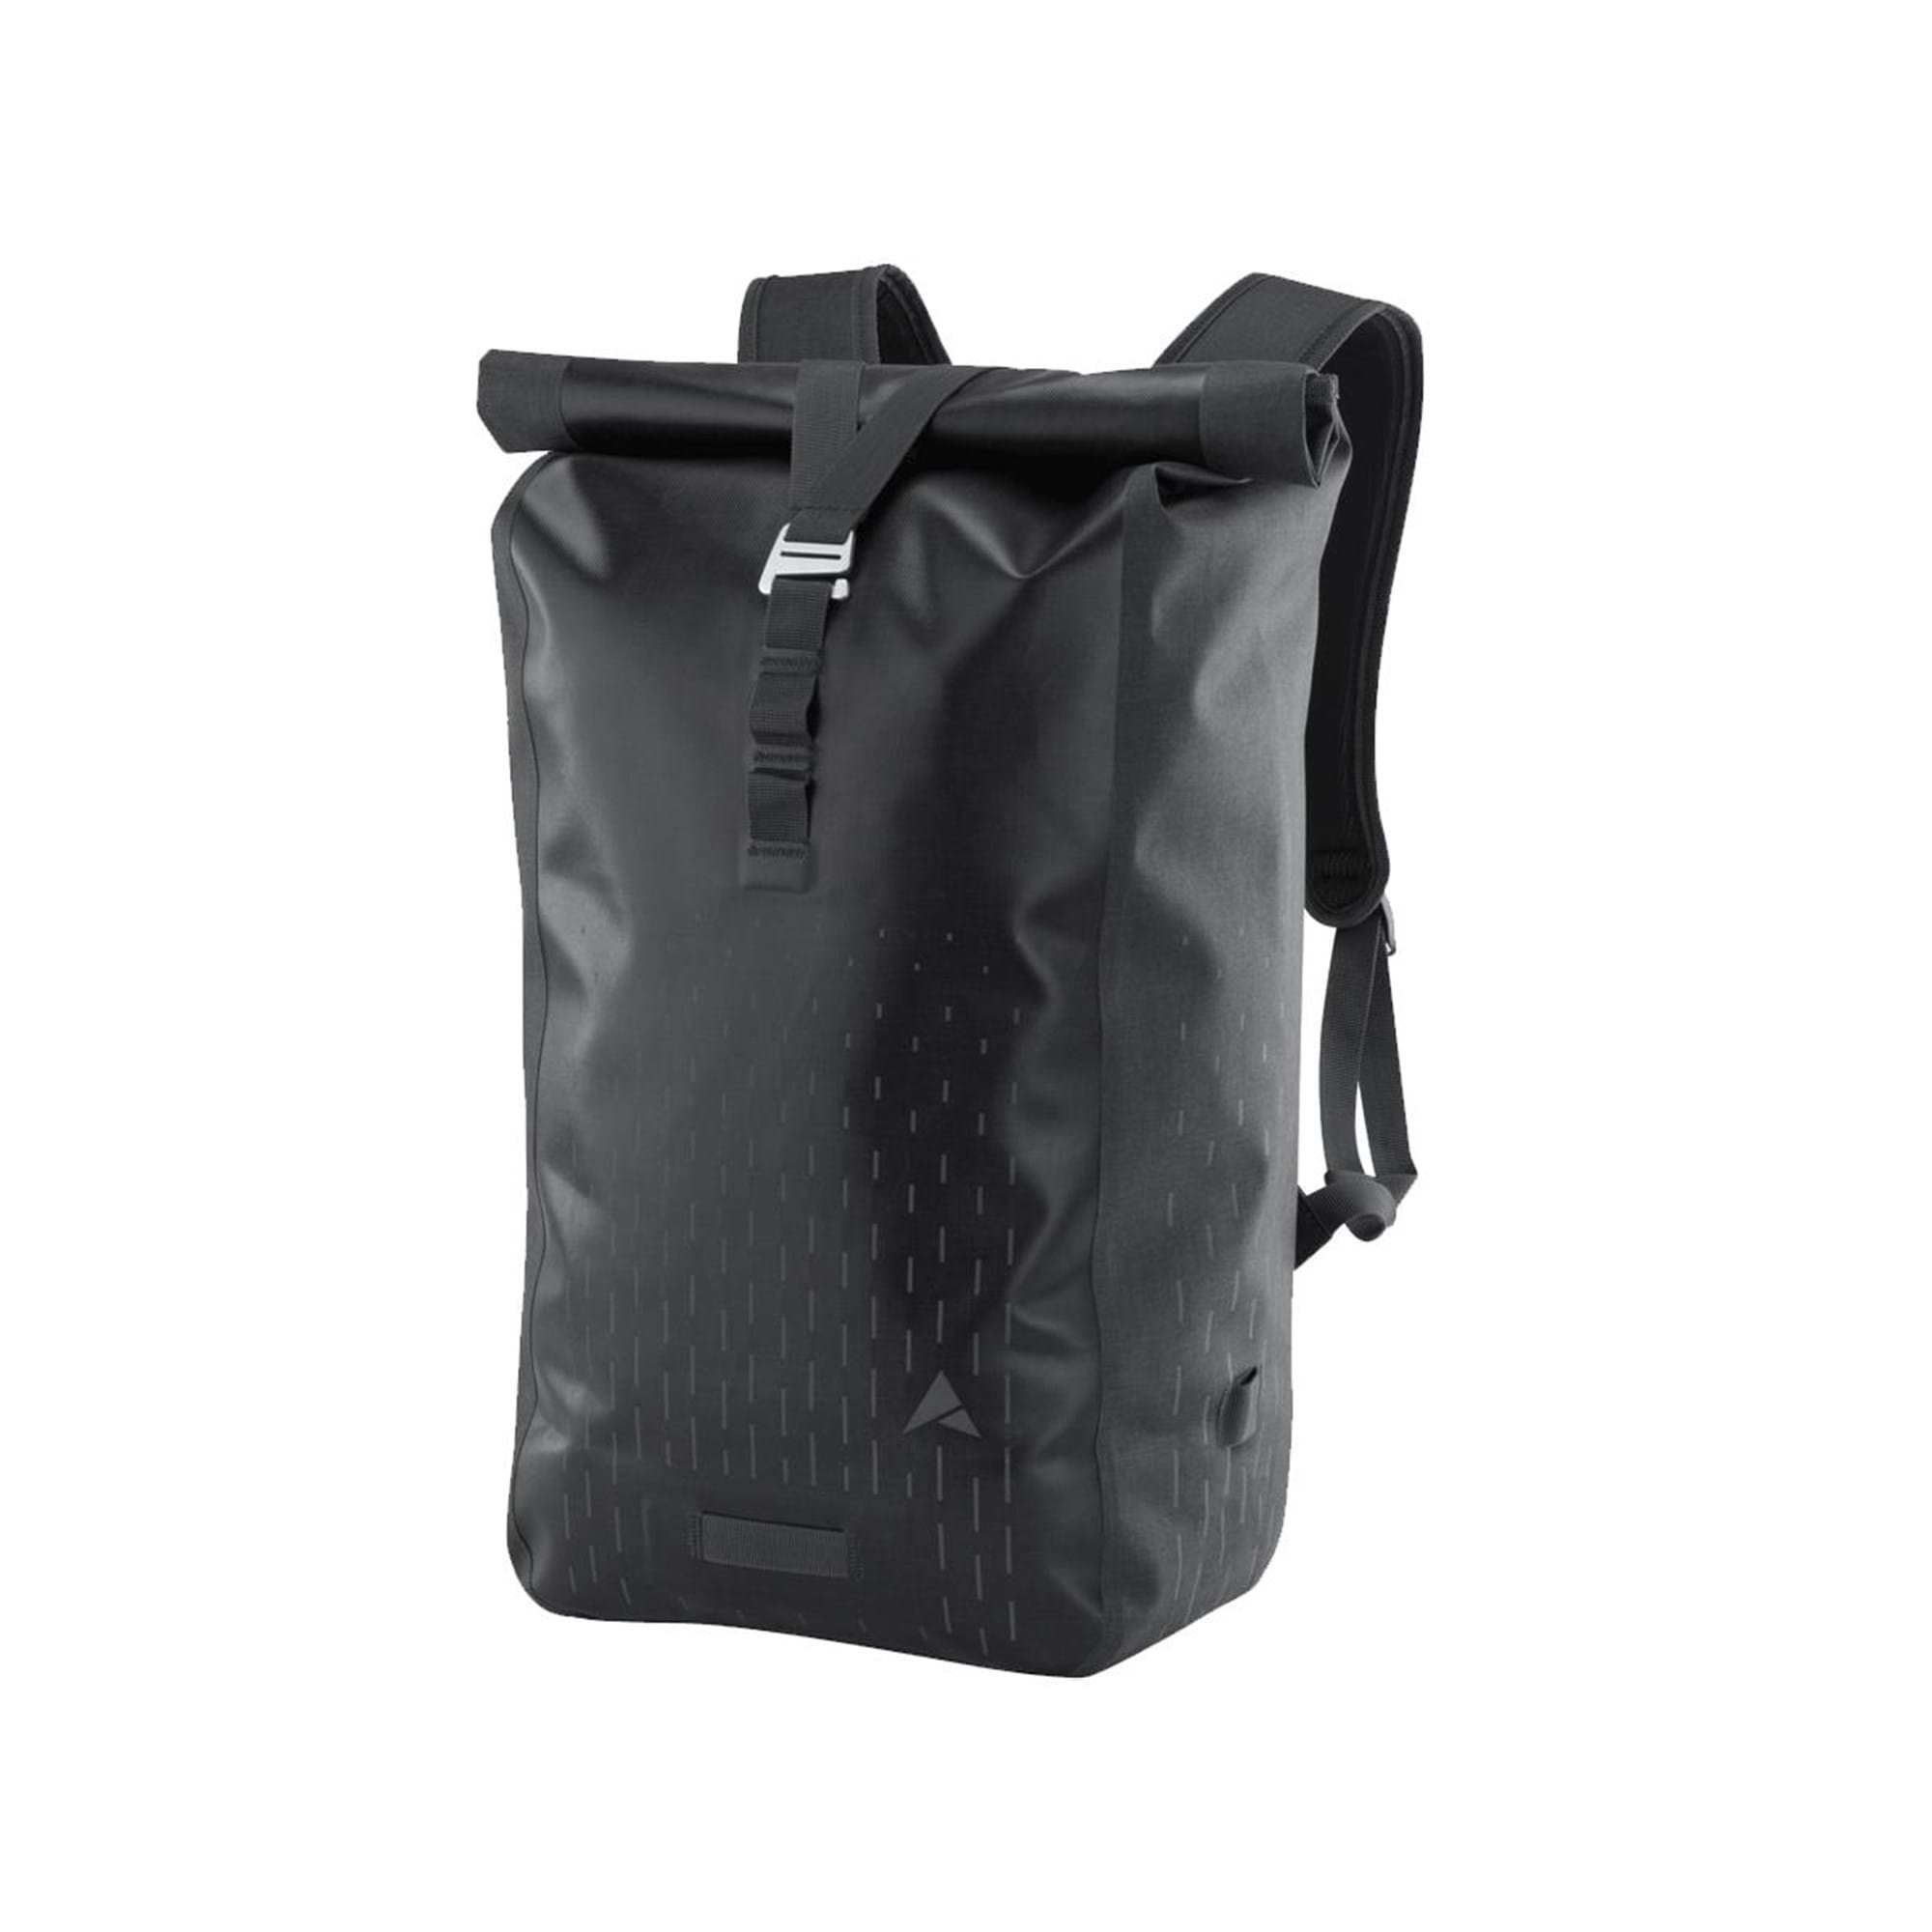 You added <b><u>Altura Thunderstorm City 30 Litres Backpack Bag, Black</u></b> to your cart.